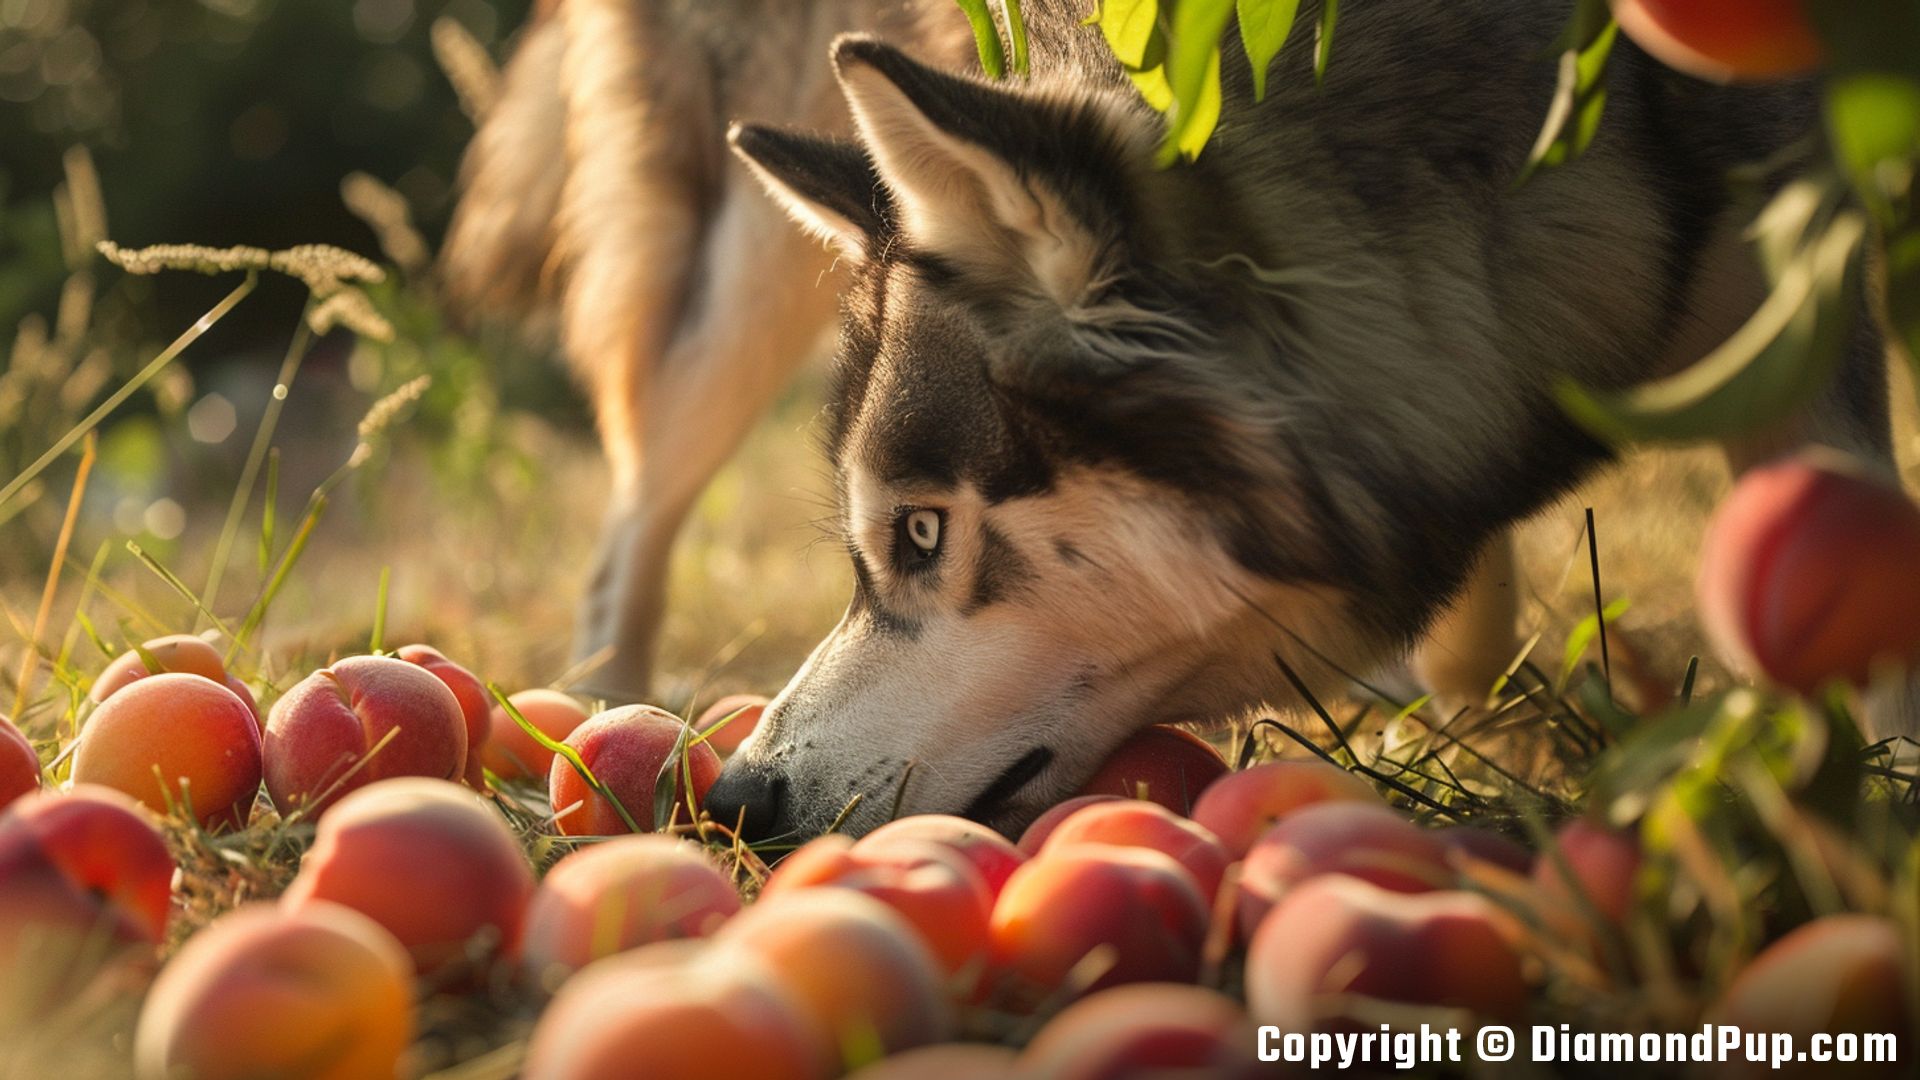 Photograph of a Cute Husky Eating Peaches